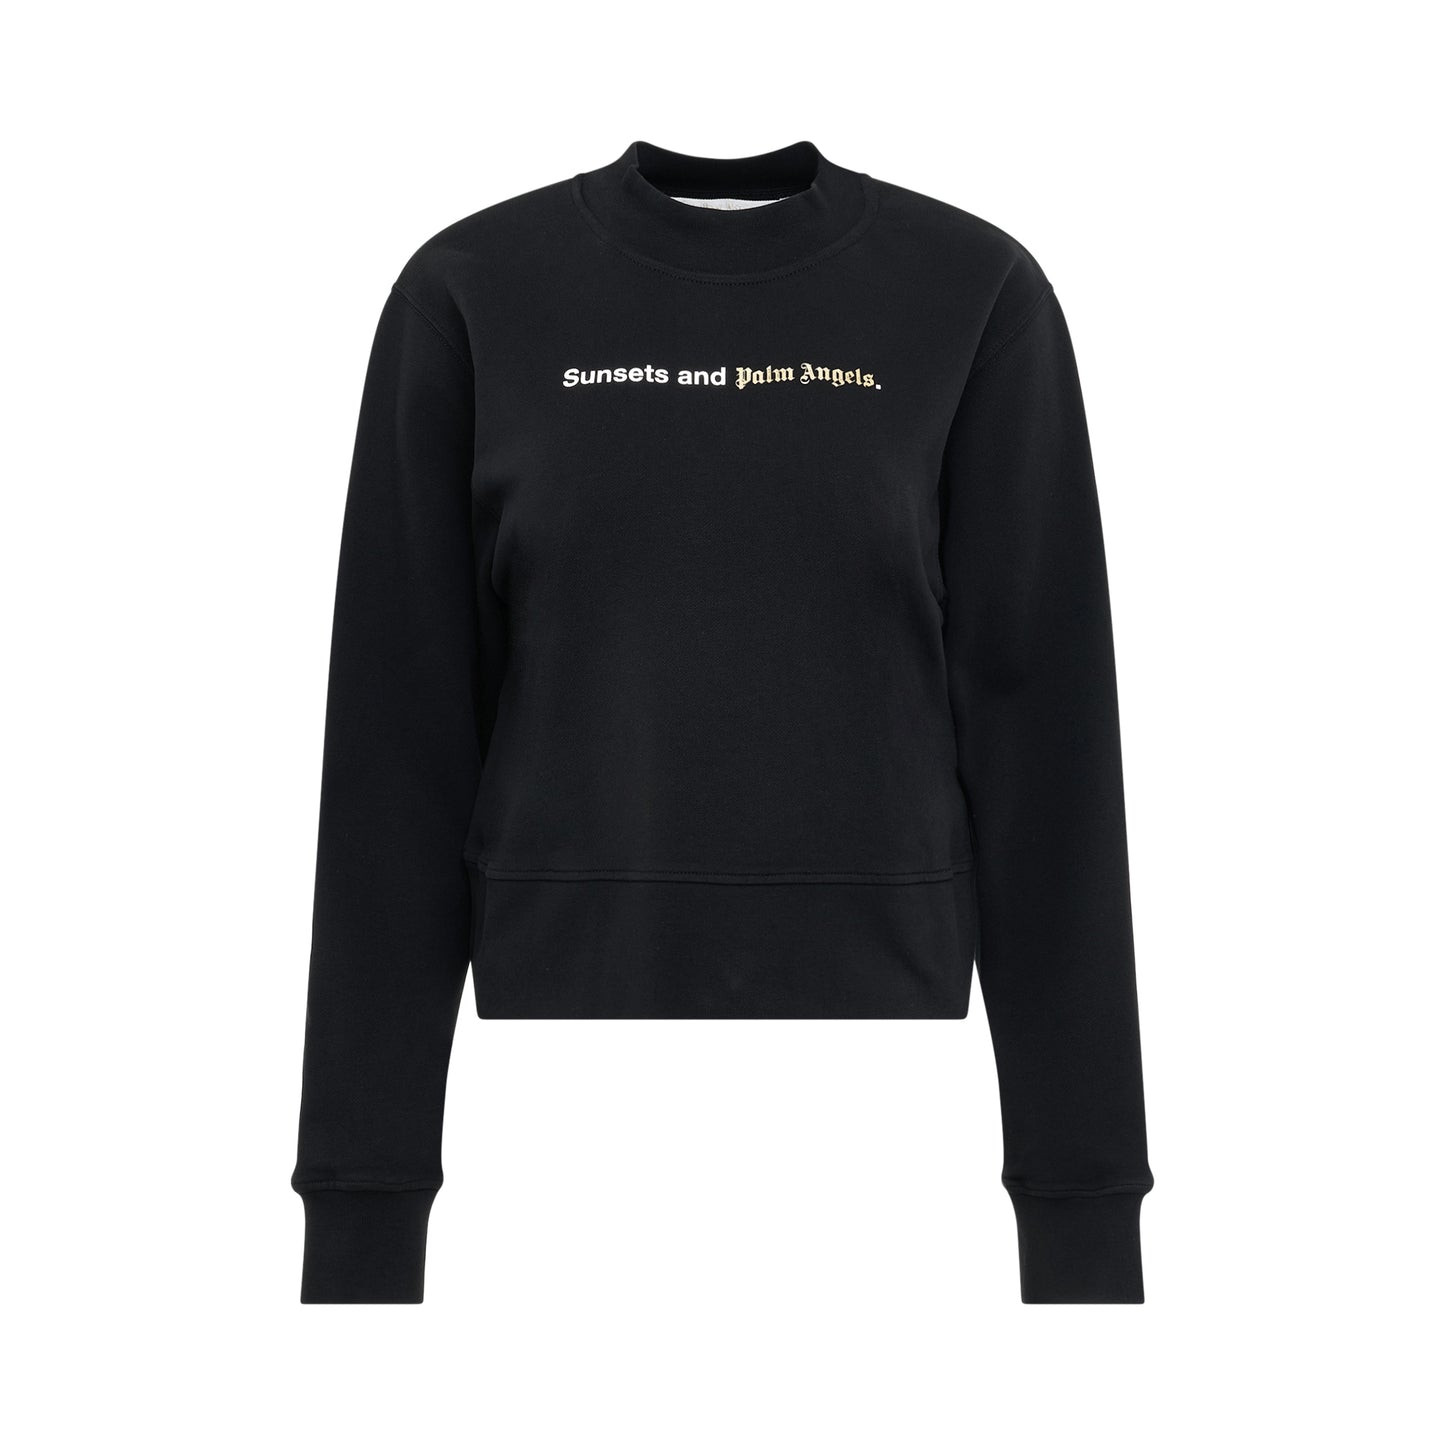 Sunset Slogan Sweatshirt in Black/White